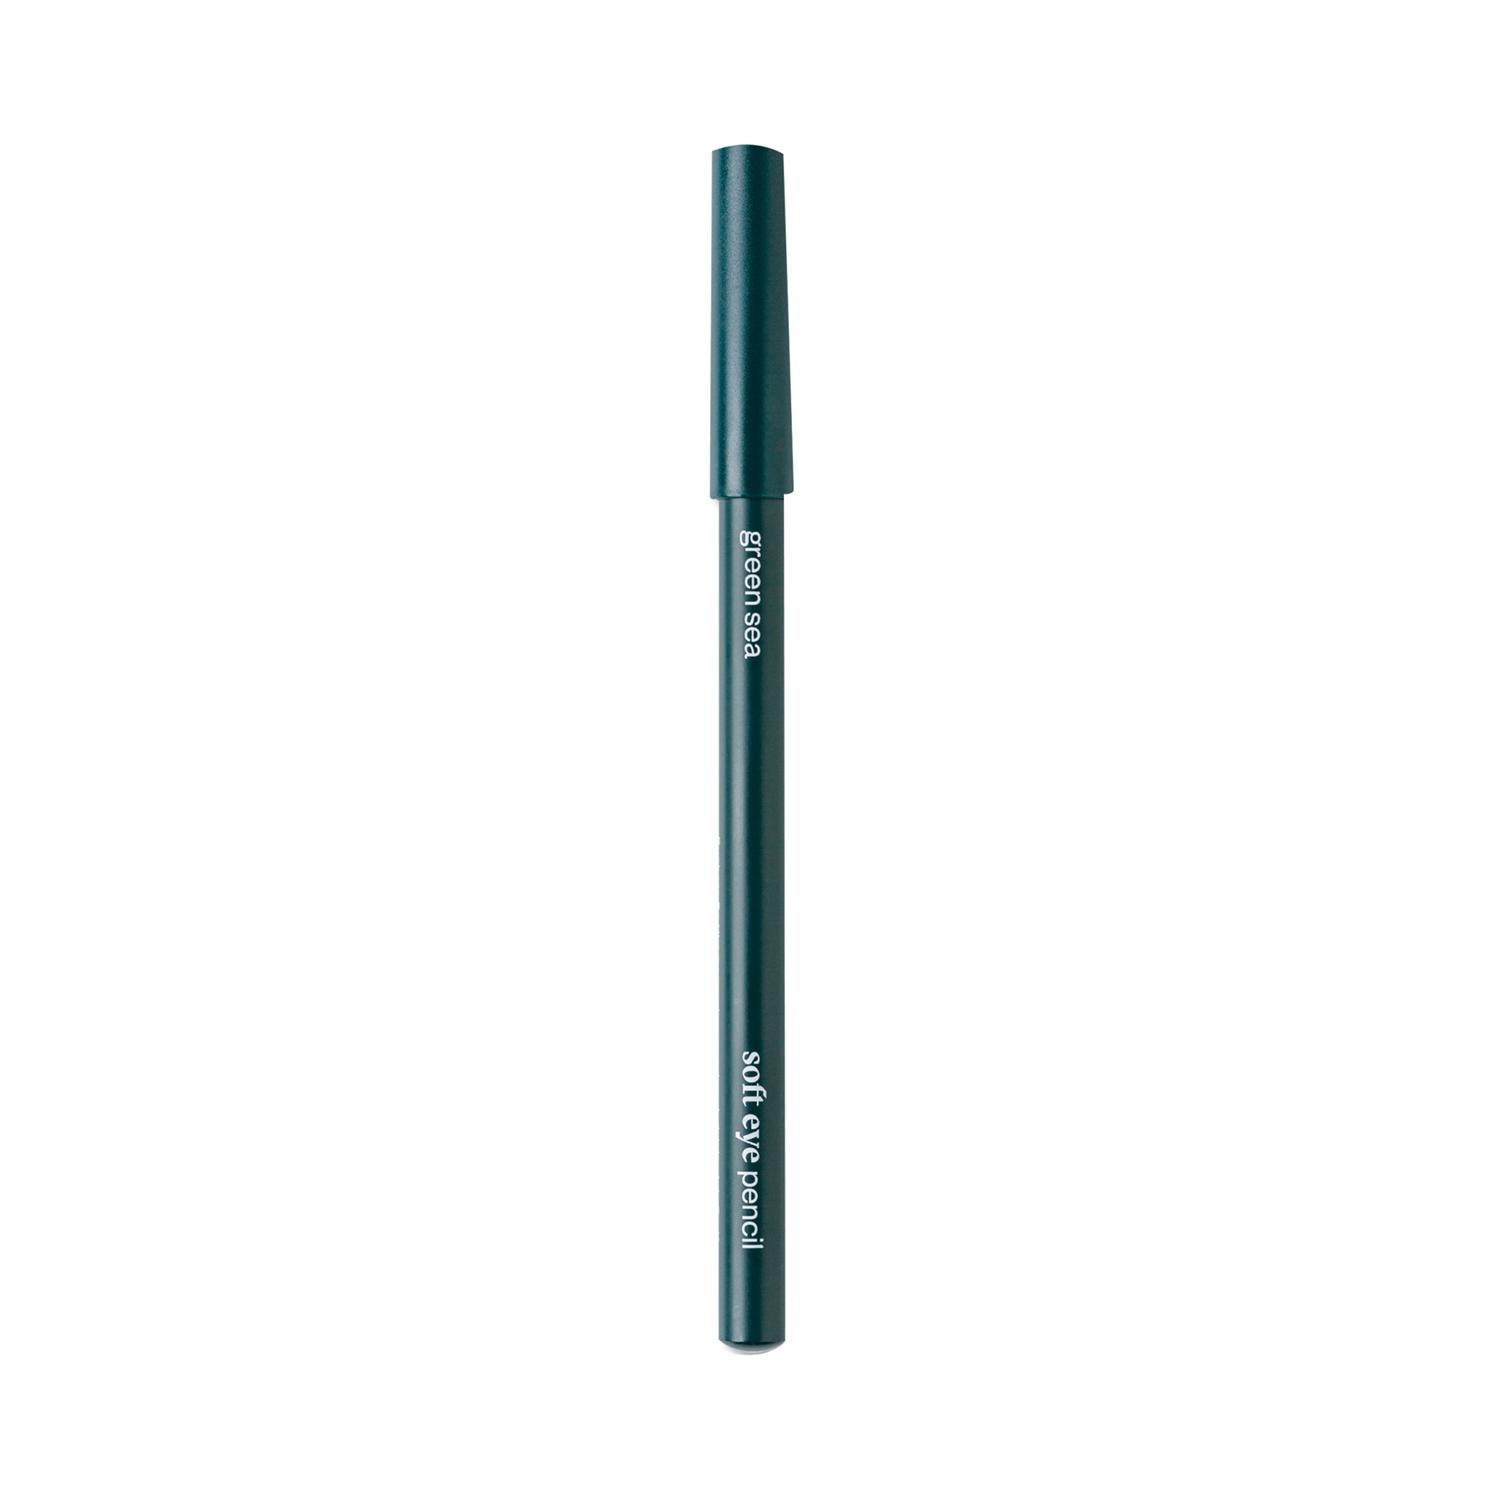 paese cosmetics soft eye pencil - 05 green sea (1.5g)